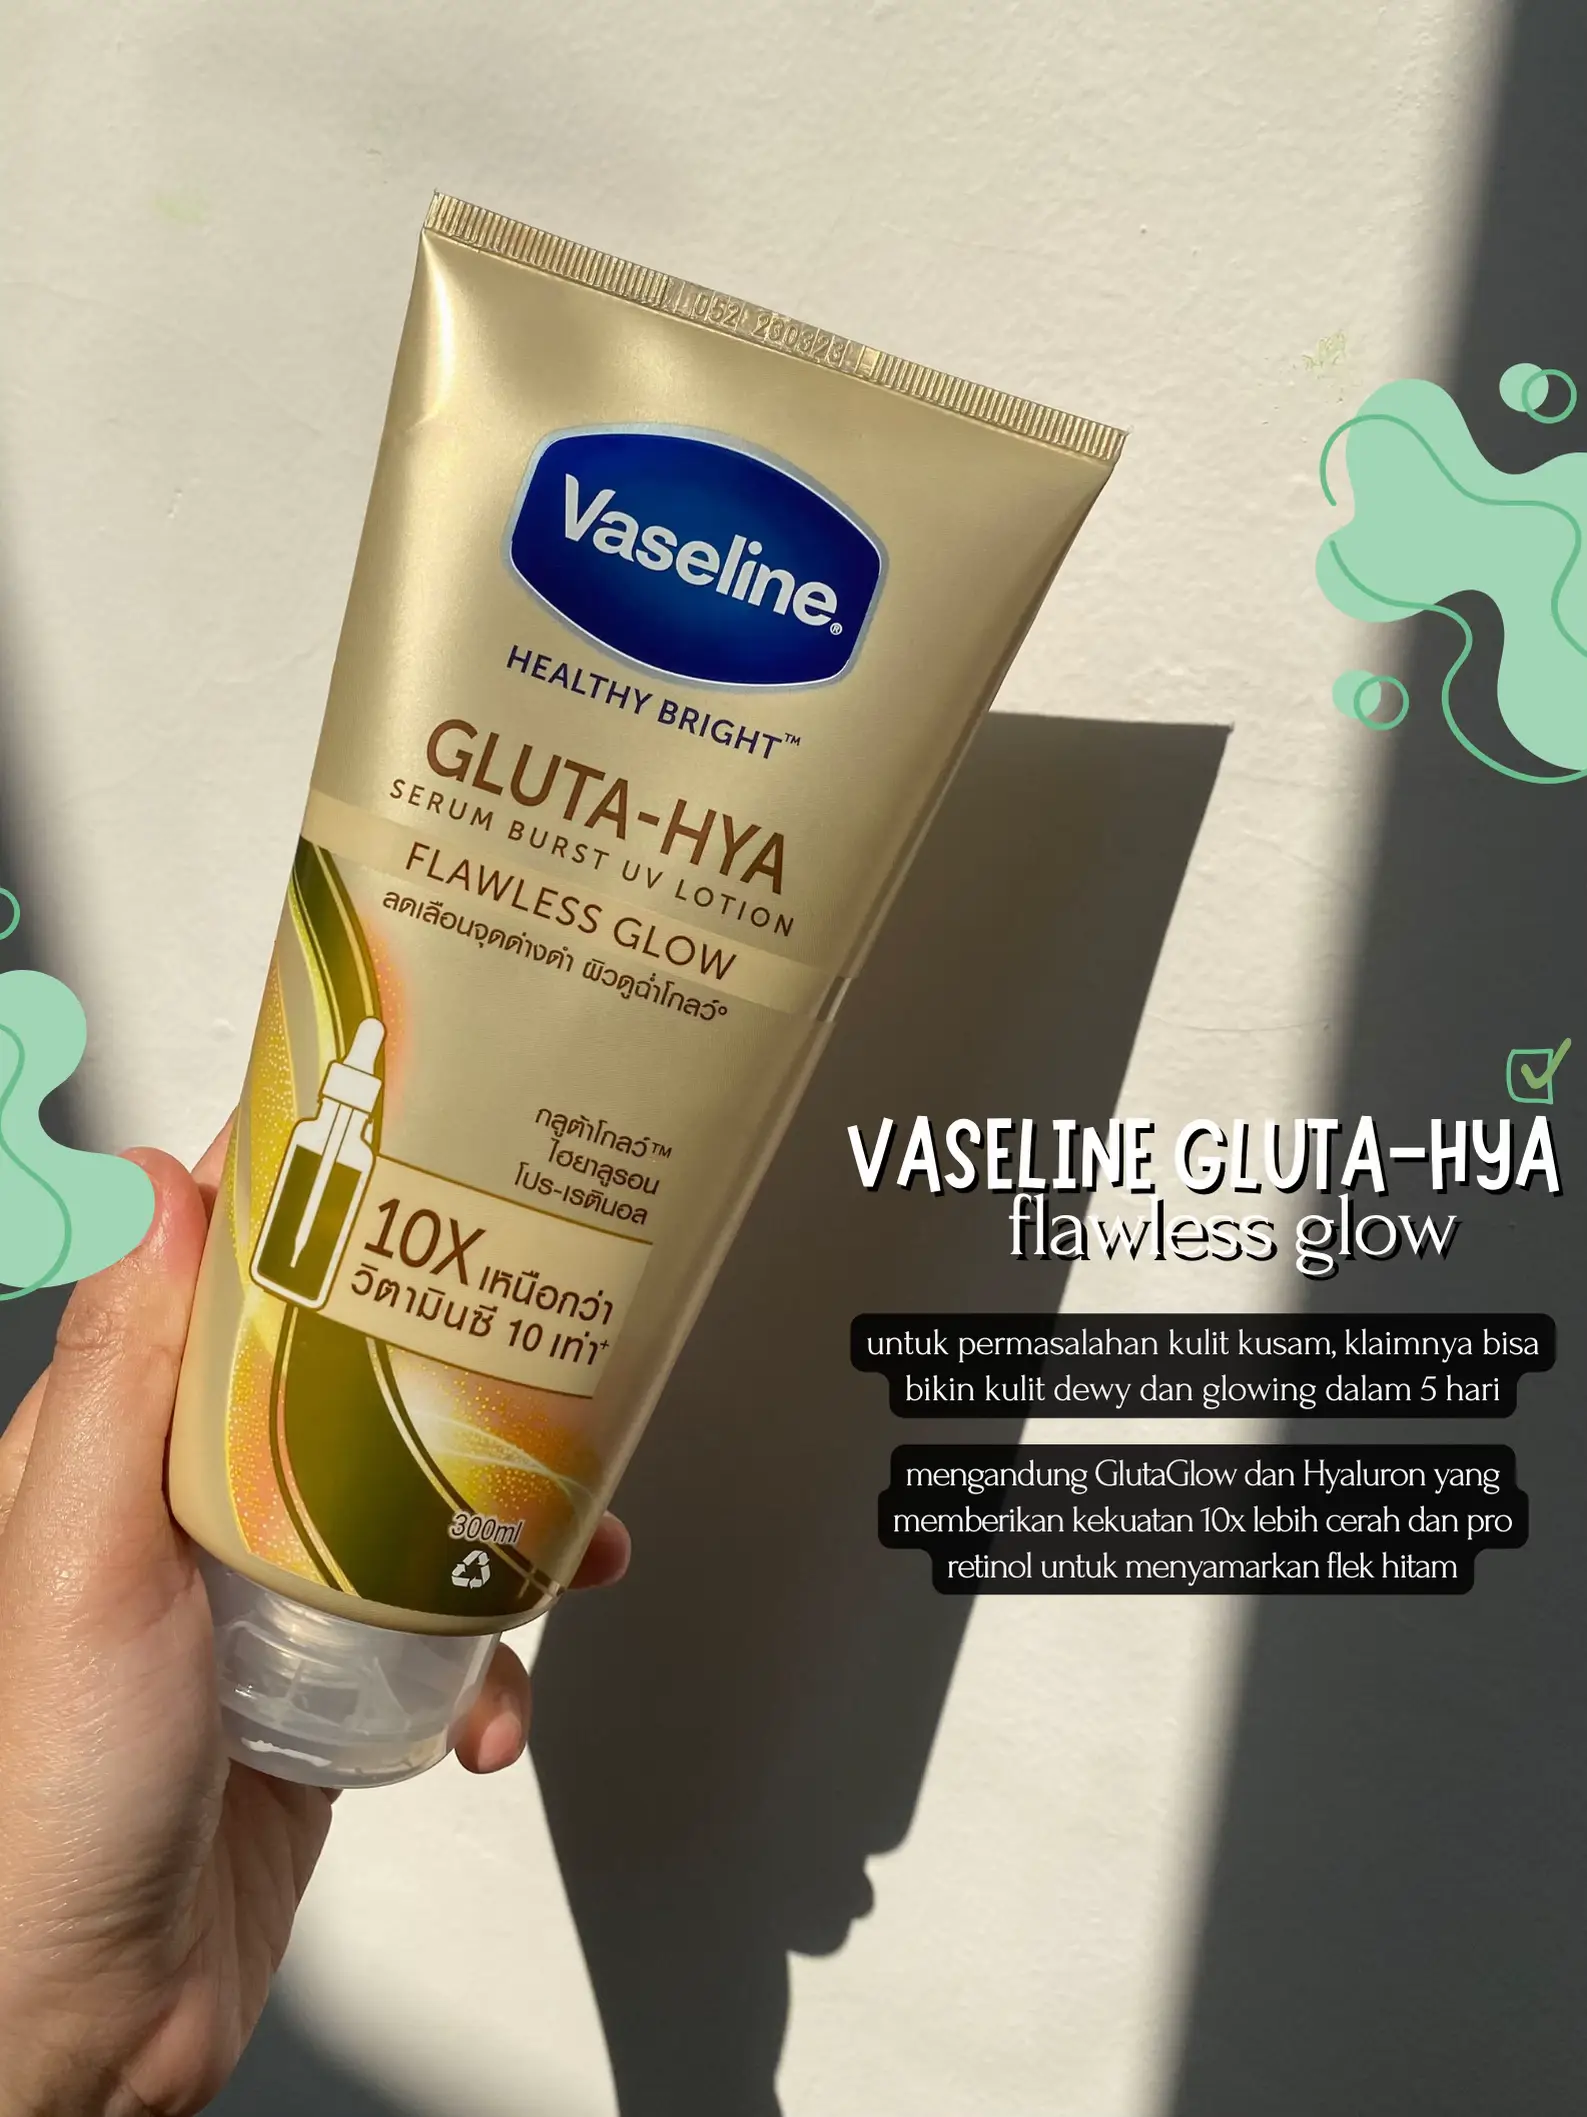 Vaseline Healthy Bright Gluta-Hya Serum Burst UV Lotion Flawless Glow -  300ml